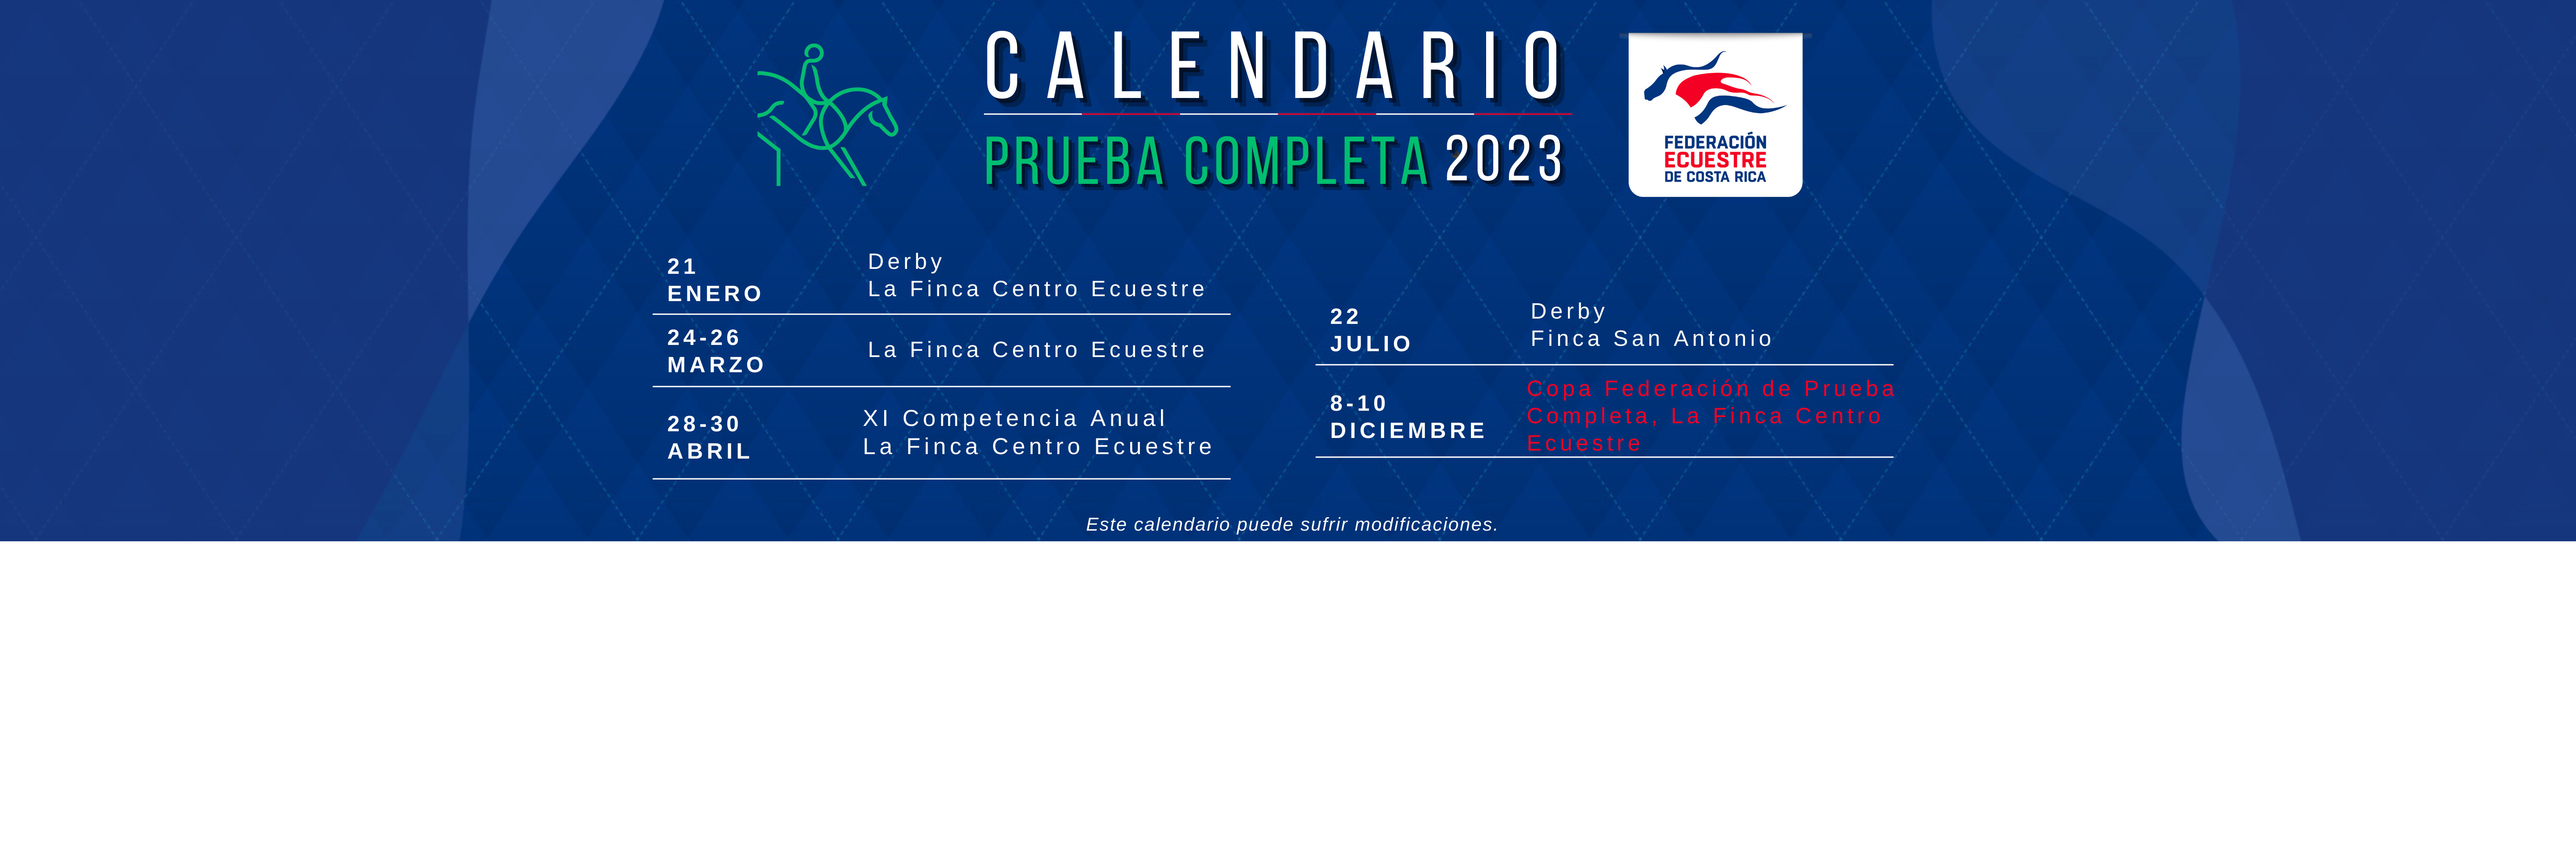 Calendario Prueba Completa 2023